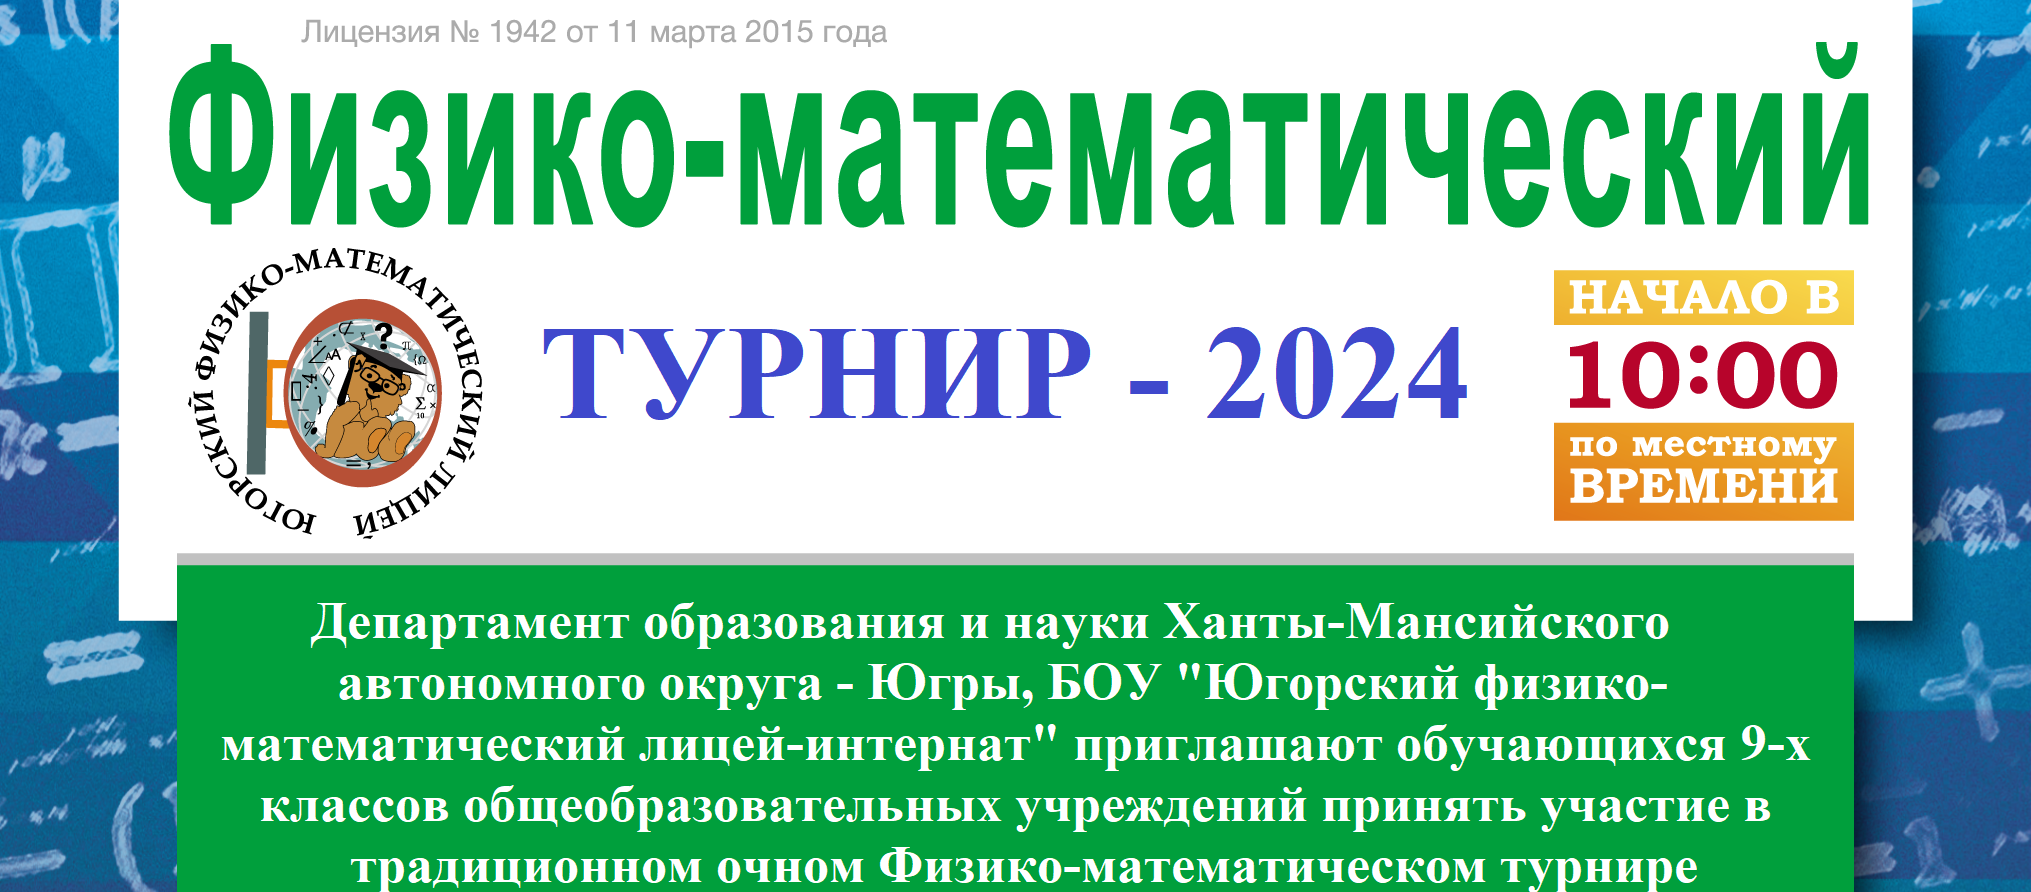 ФИЗИКО-МАТЕМАТИЧЕСКИЙ ТУРНИР 2024.